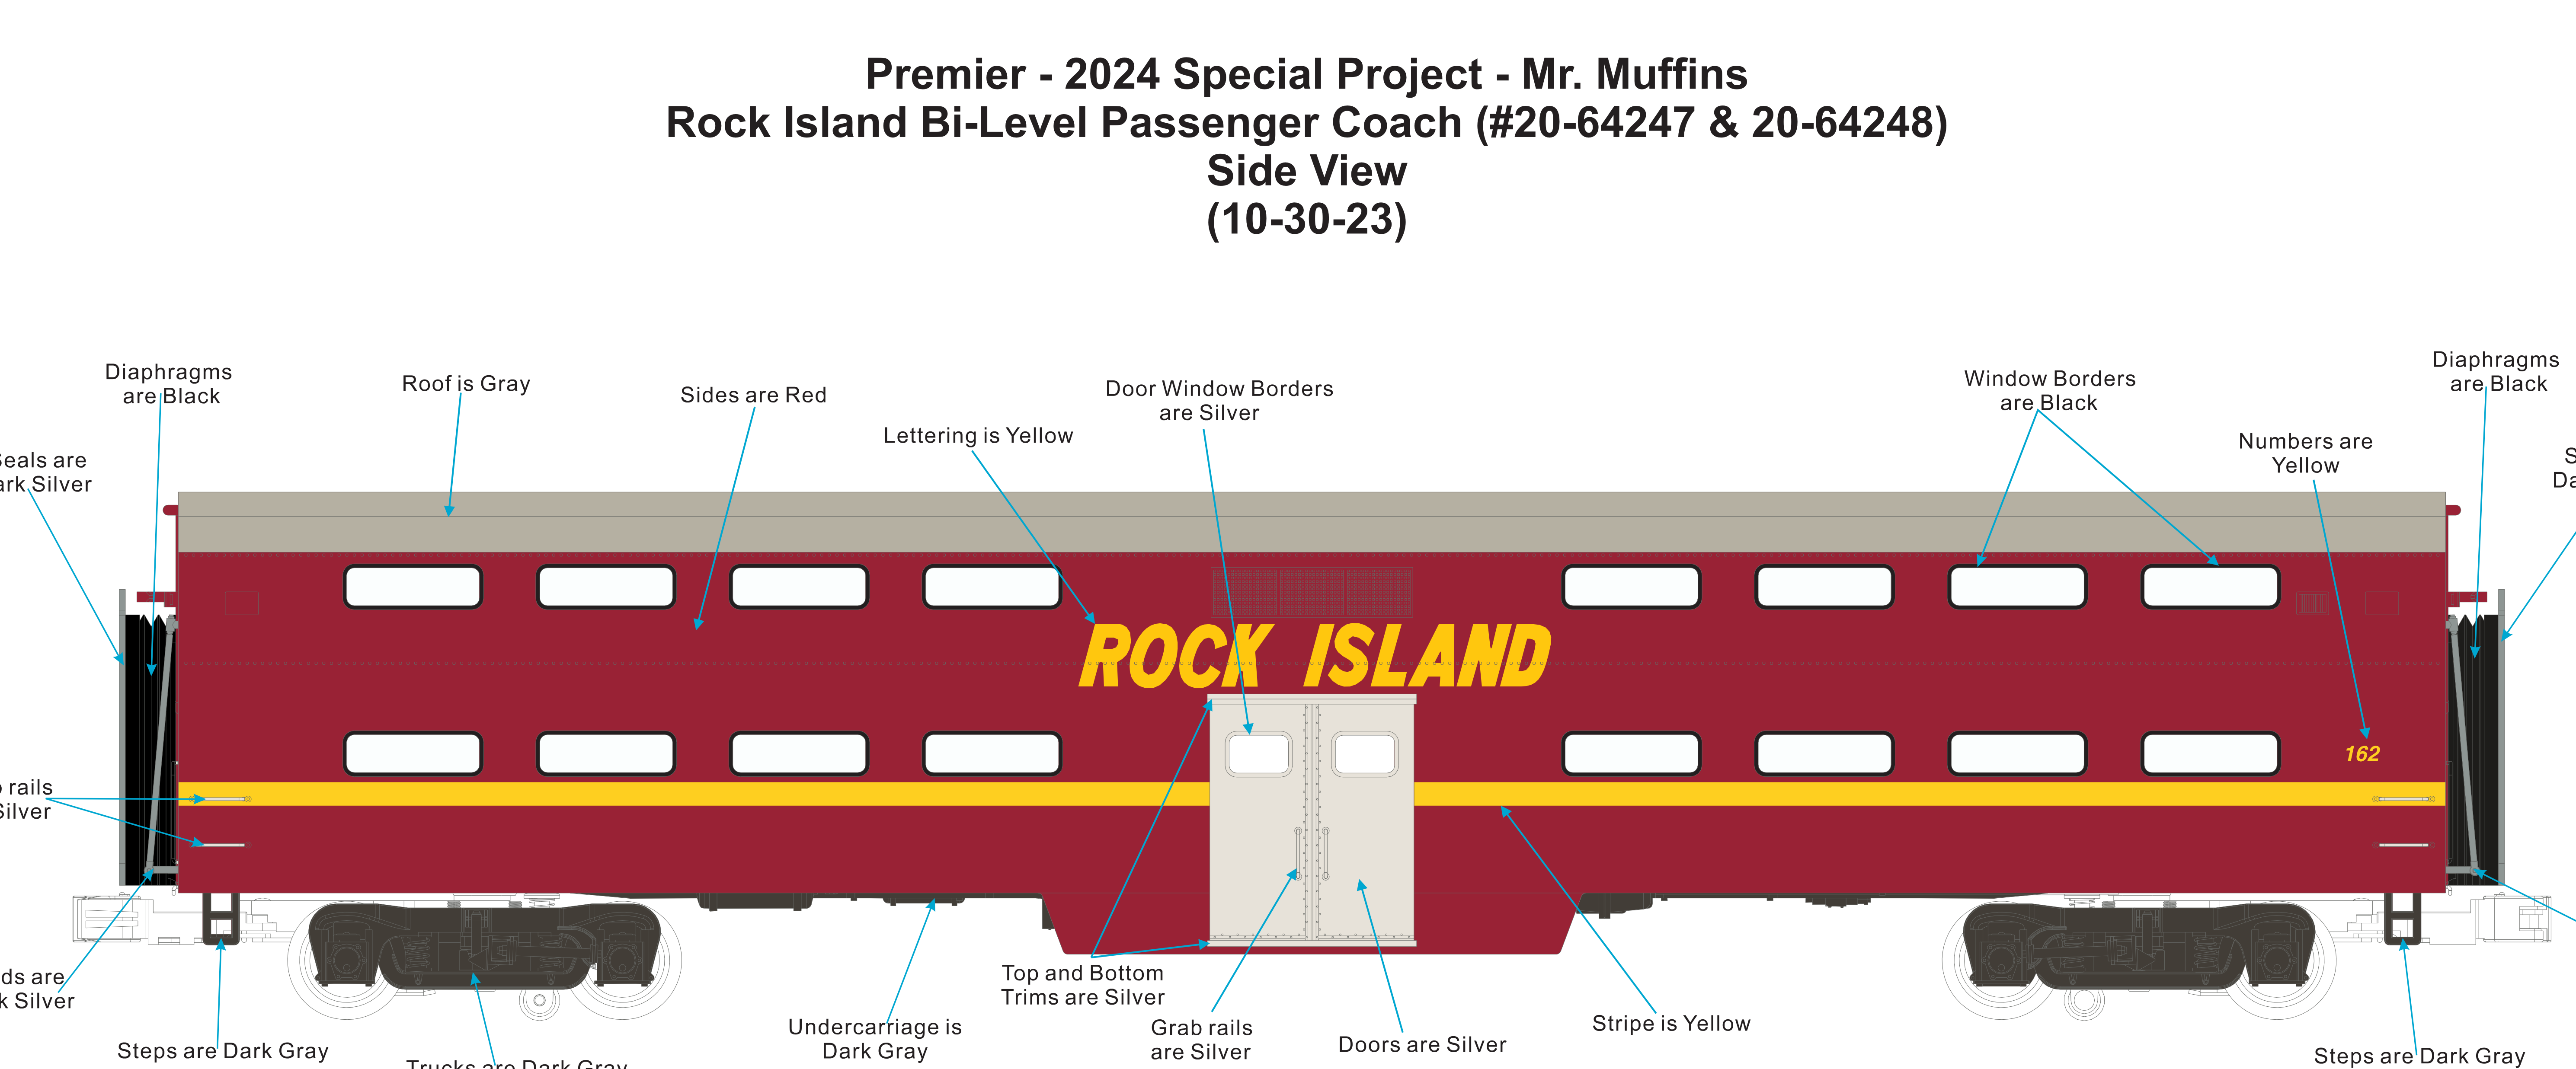 MTH - Premier - 70’ Bi-Level Gallery Car "Rock Island” (6-Car) - Custom Run for MrMuffin'sTrains